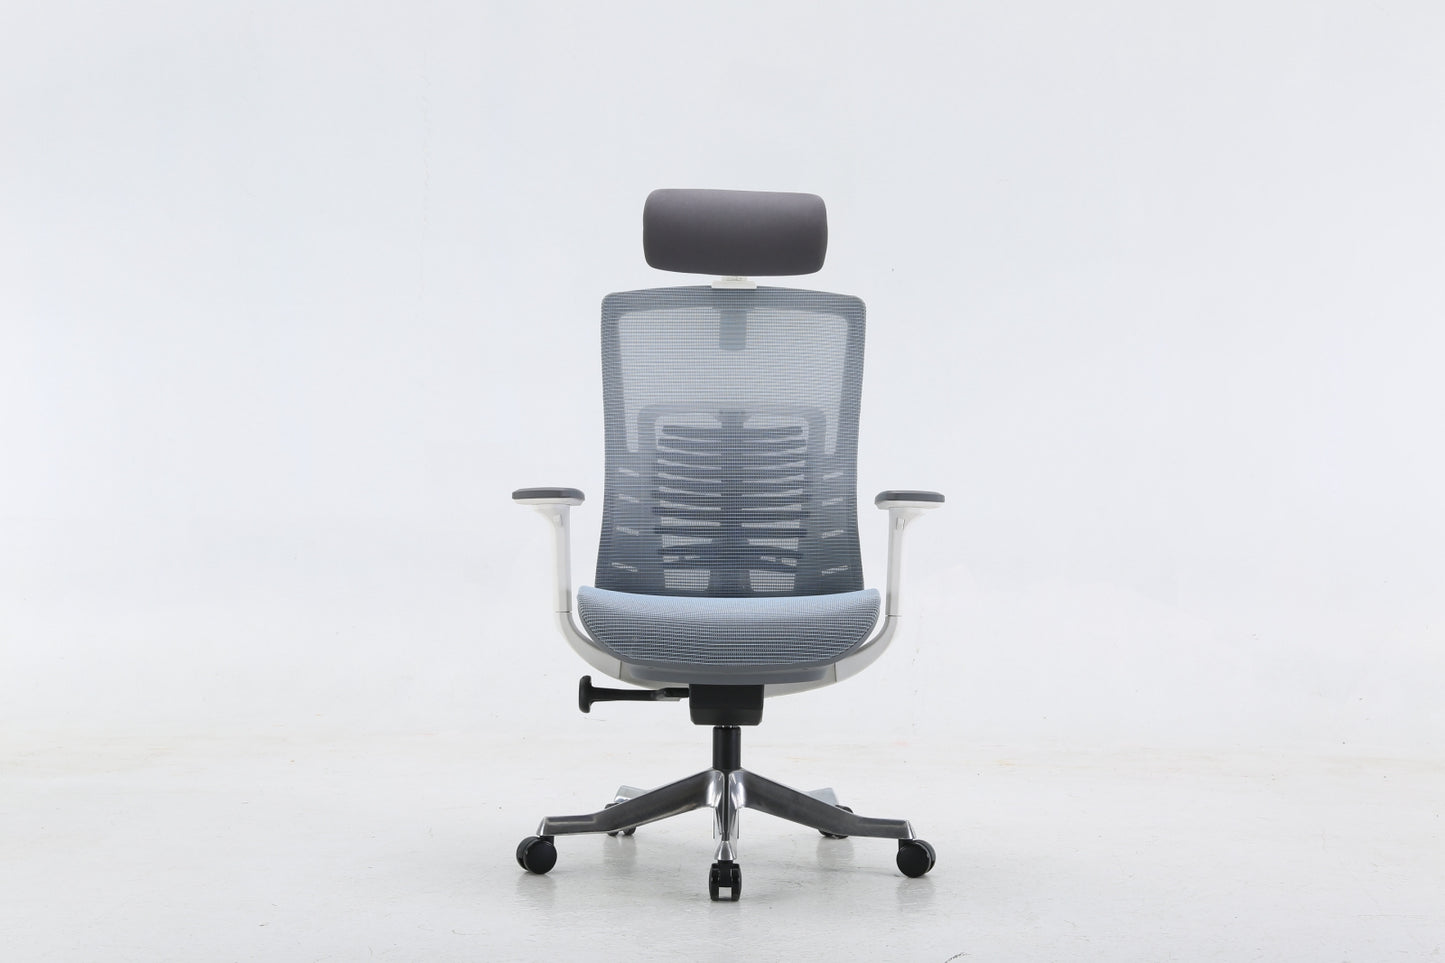 Sihoo M93 Ergonomic Chair